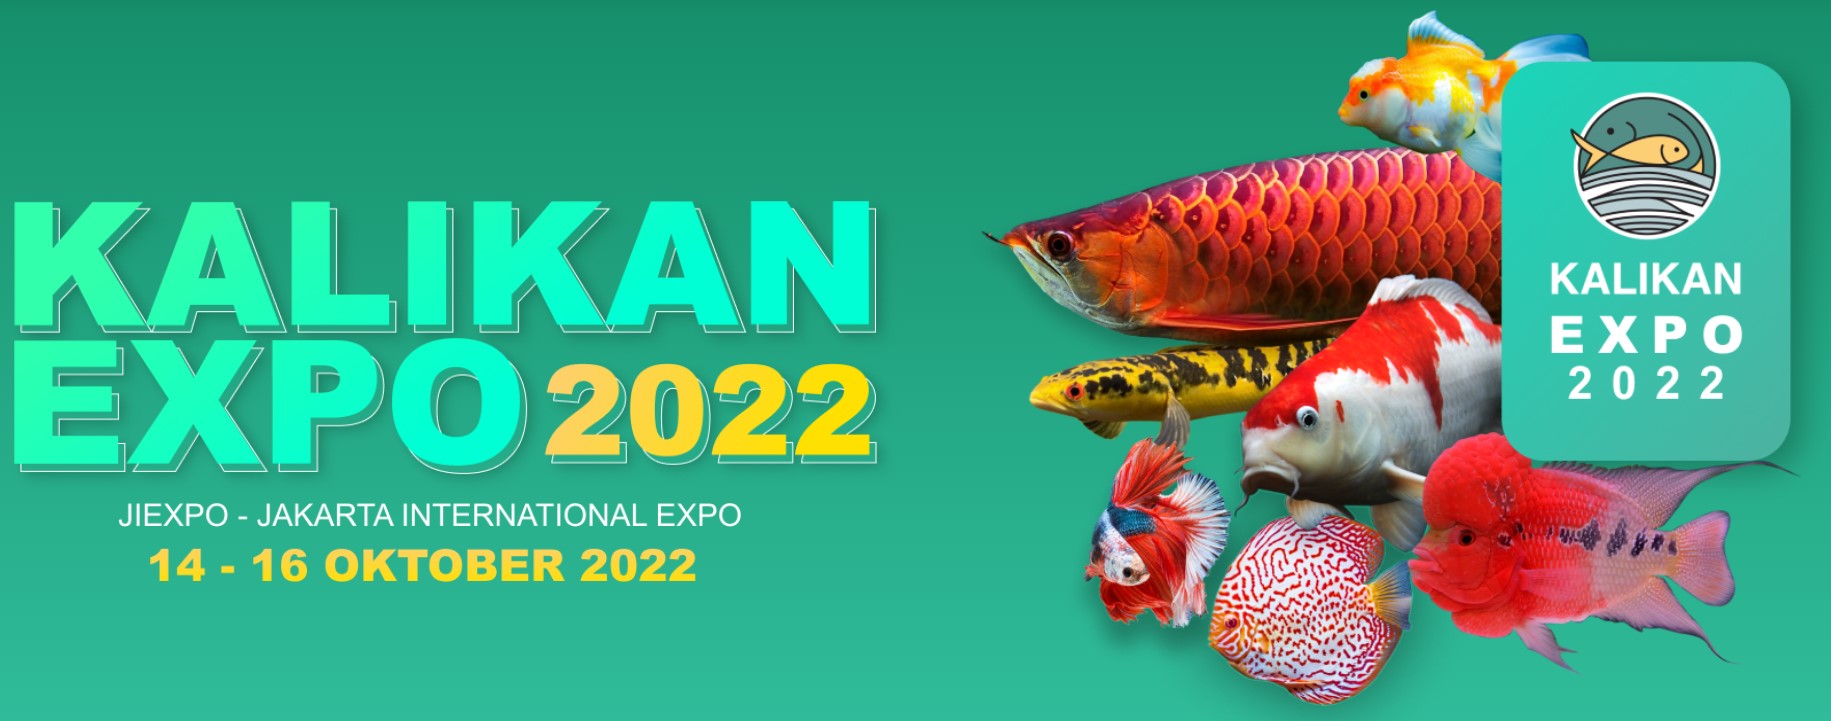 Kalikan Expo 2022